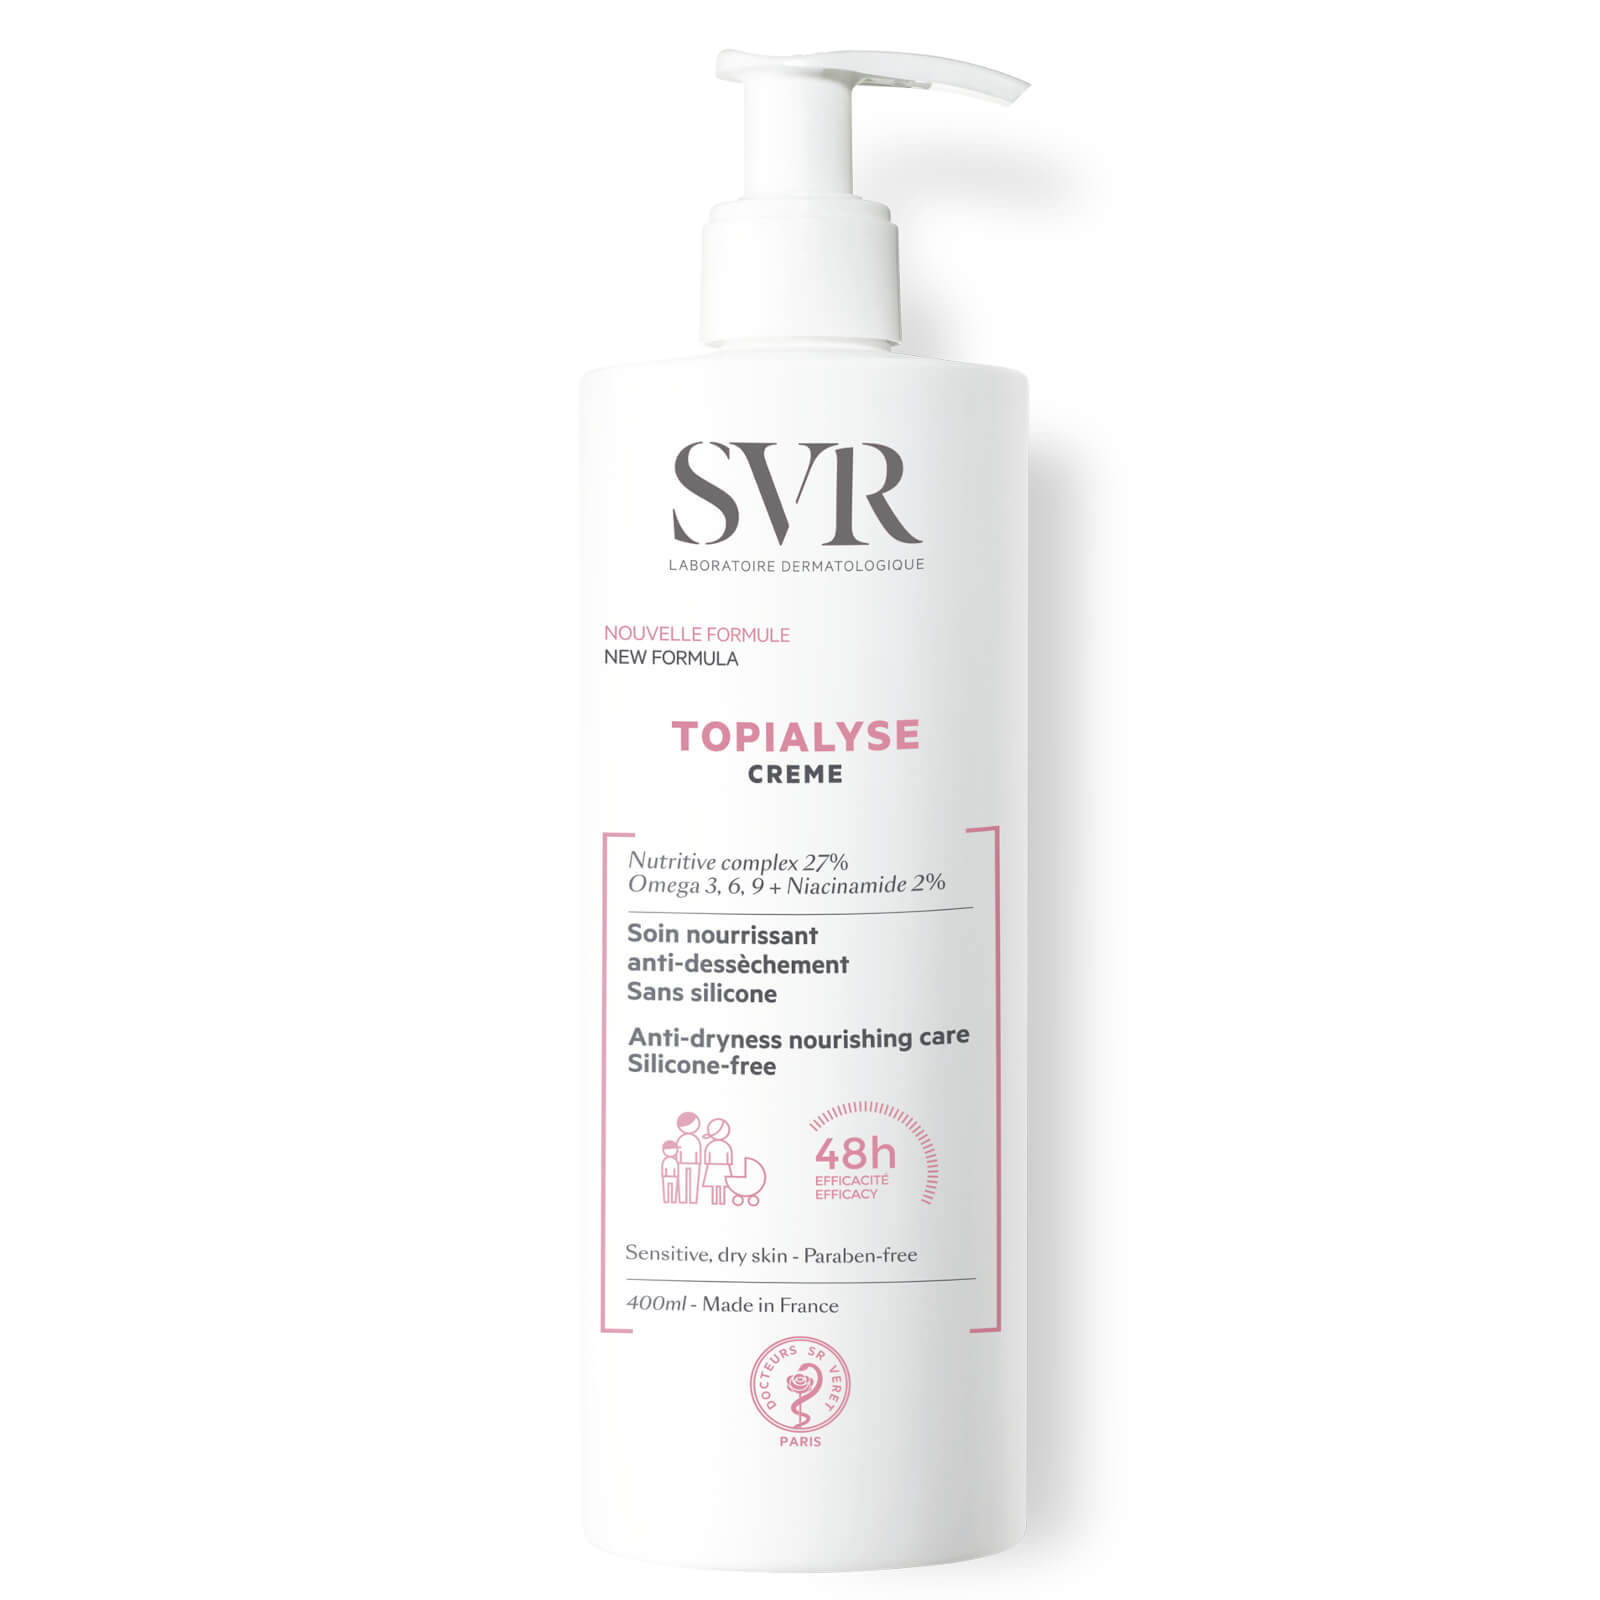 SVR Topialyse Moisturising Face + Body Cream for Dry, Sensitive + Eczema-Prone Skin of All Ages - 400ml